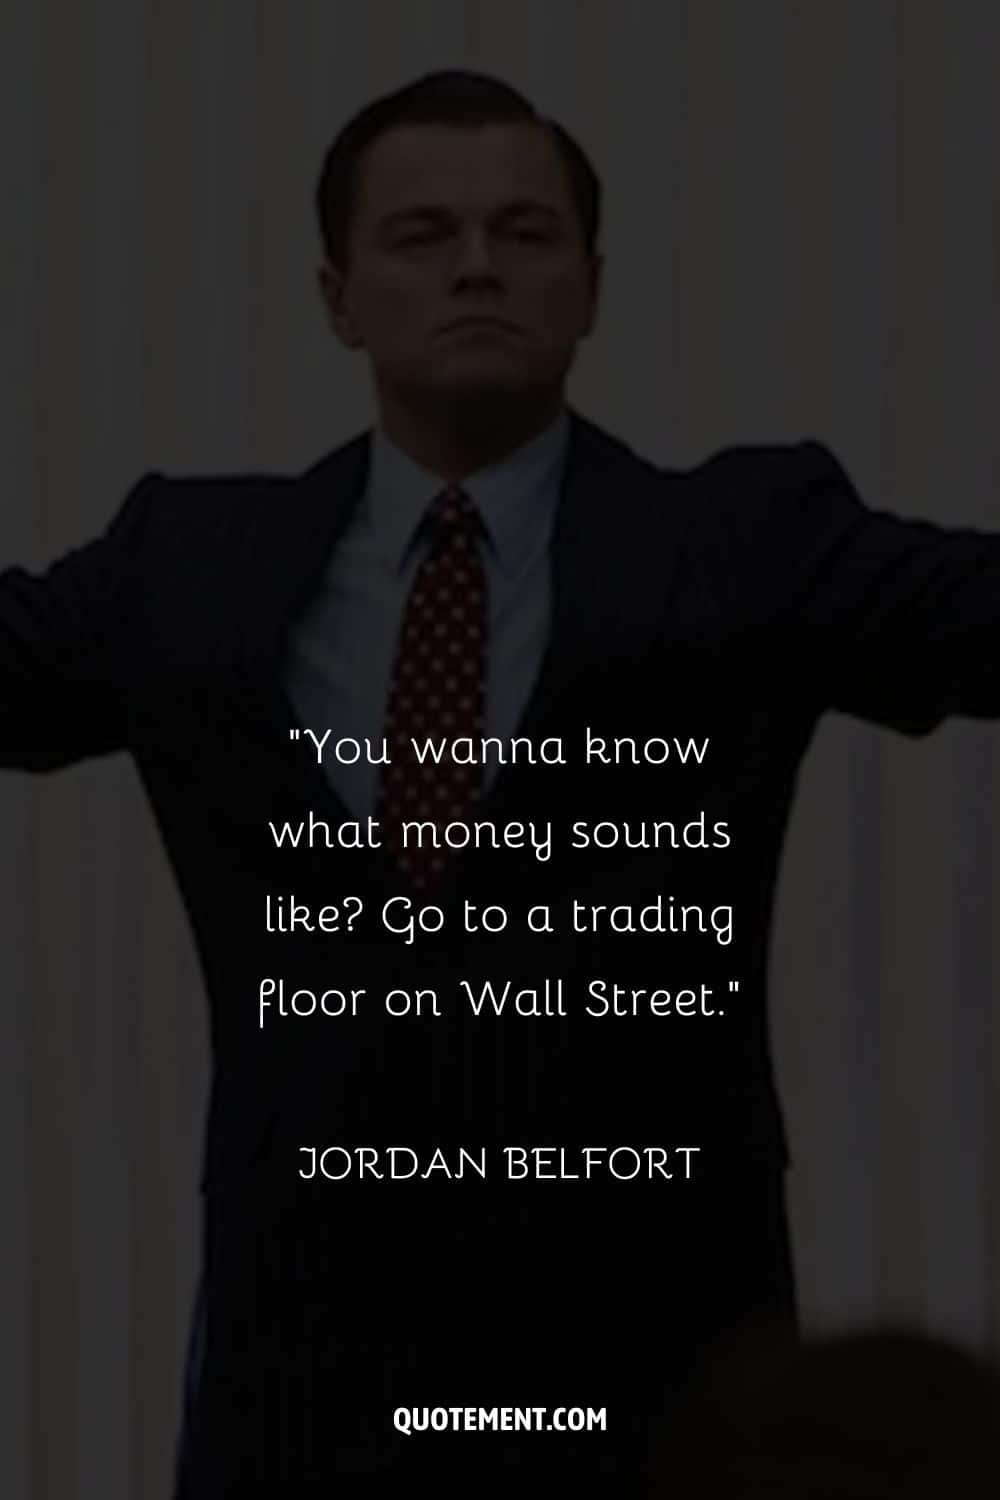 A glimpse into the confident world of Jordan Belfort representing jordan belfort quote life
